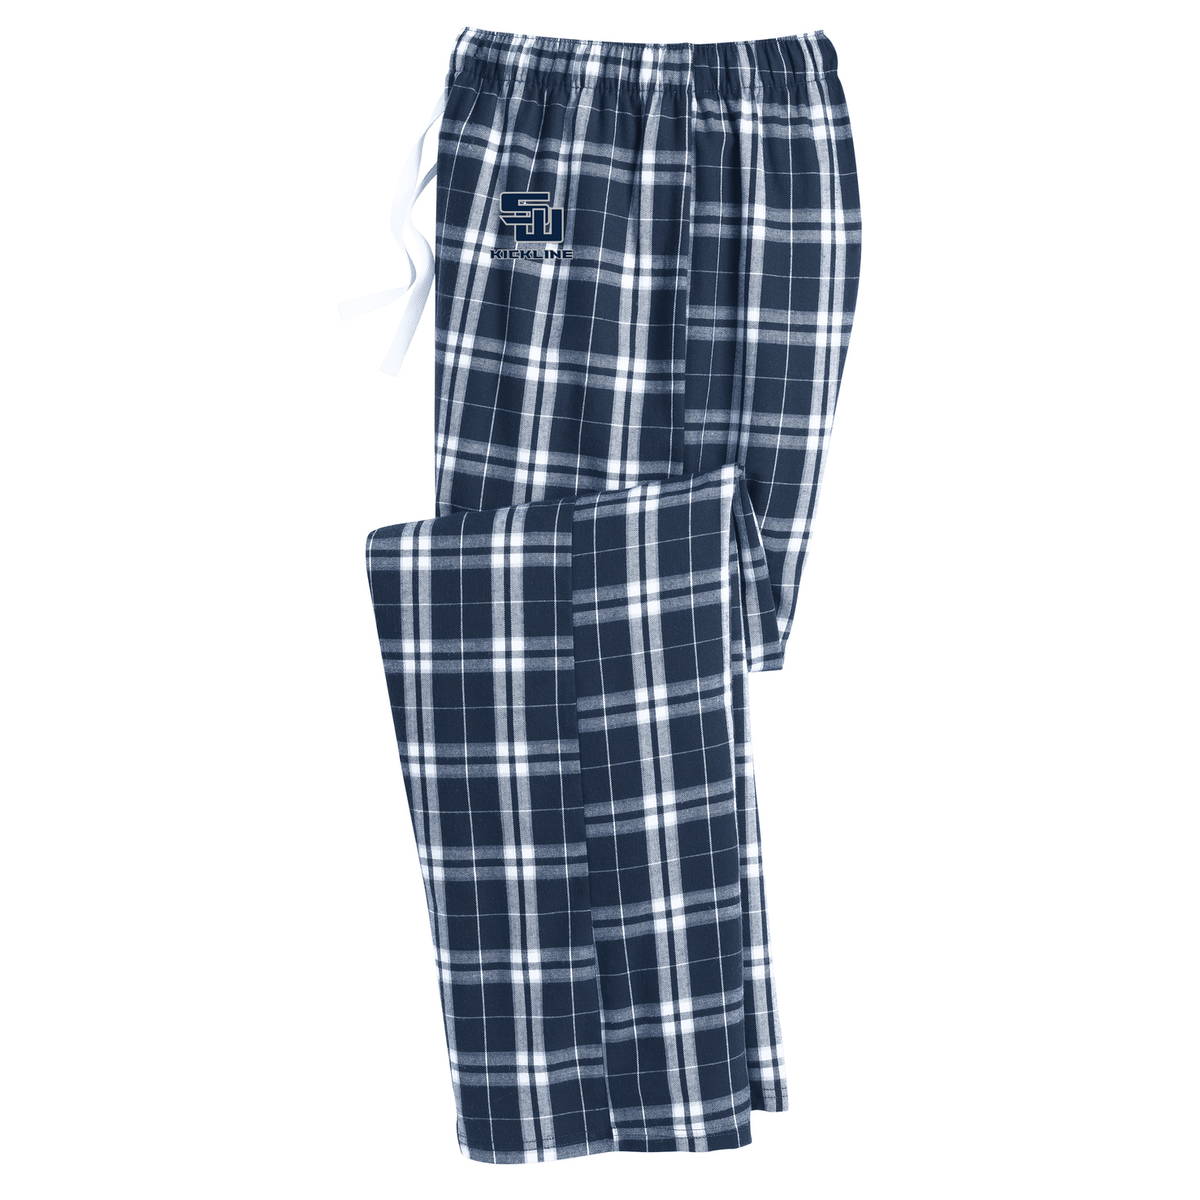 Smithtown West Kickline Plaid Pajama Pants